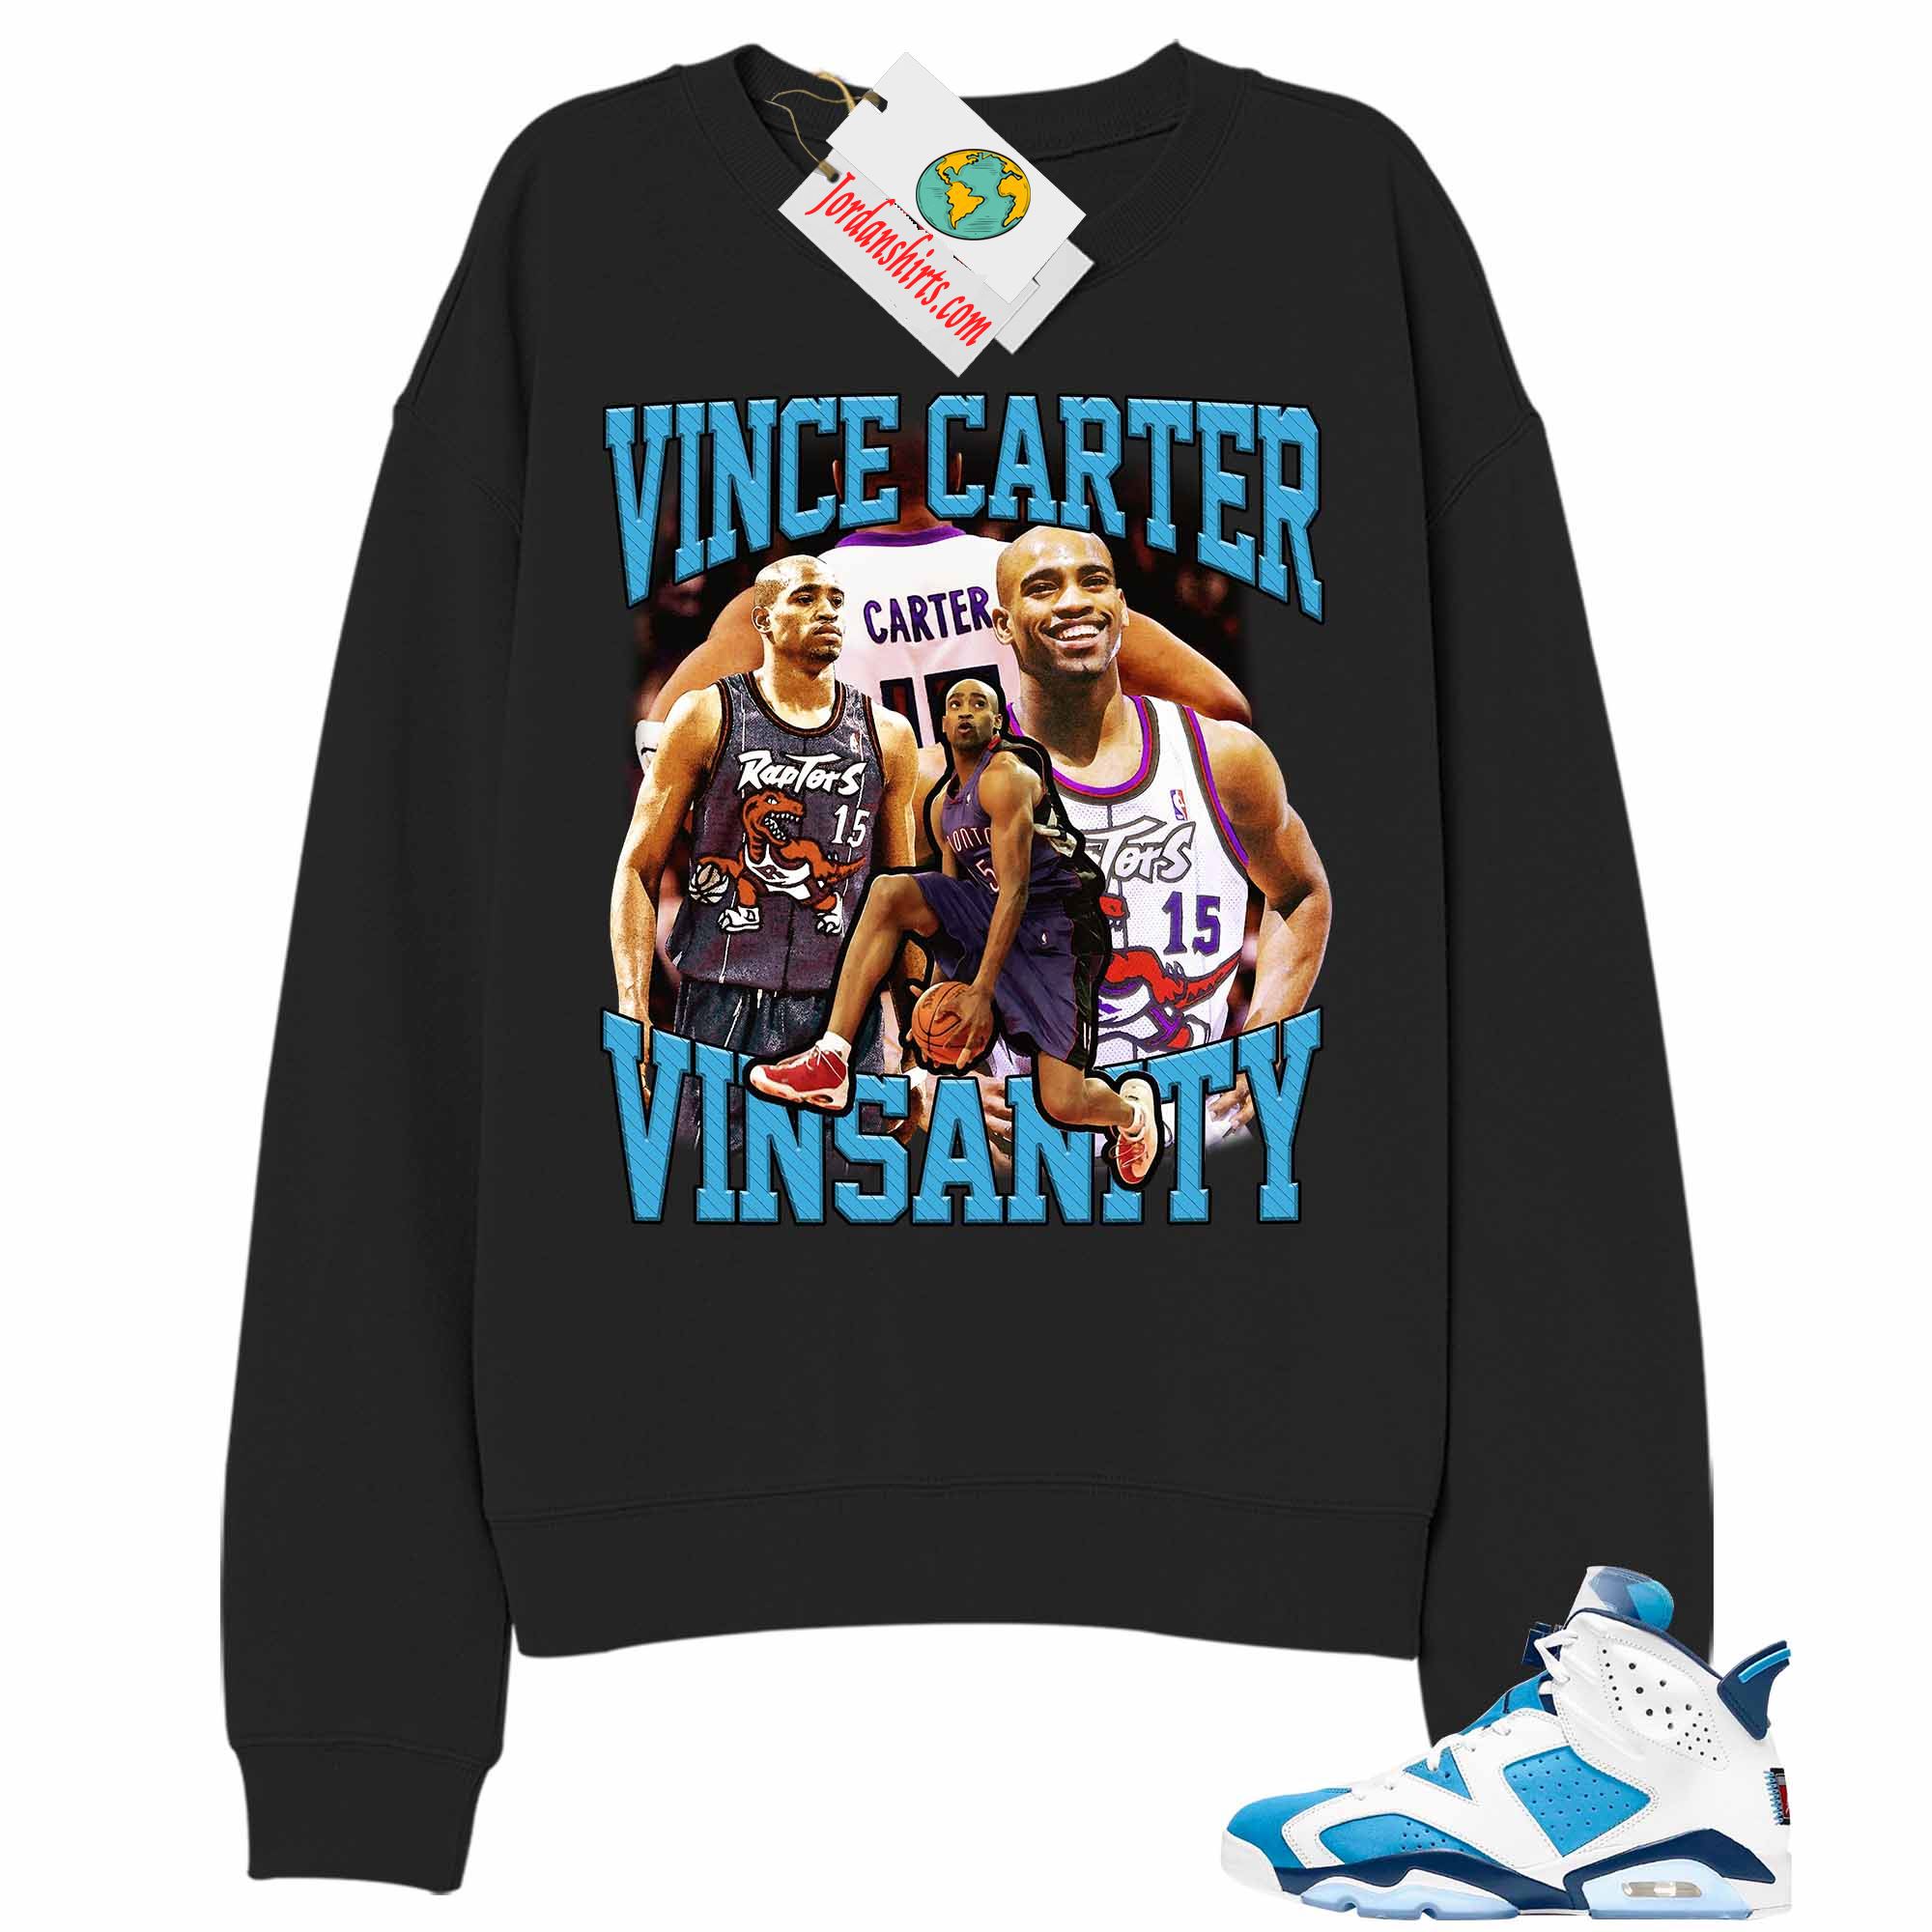 Jordan 6 Sweatshirt, Vince Carter Vinsanity Basketball 90s Retro Vintage Black Sweatshirt Air Jordan 6 Unc 6s Size Up To 5xl